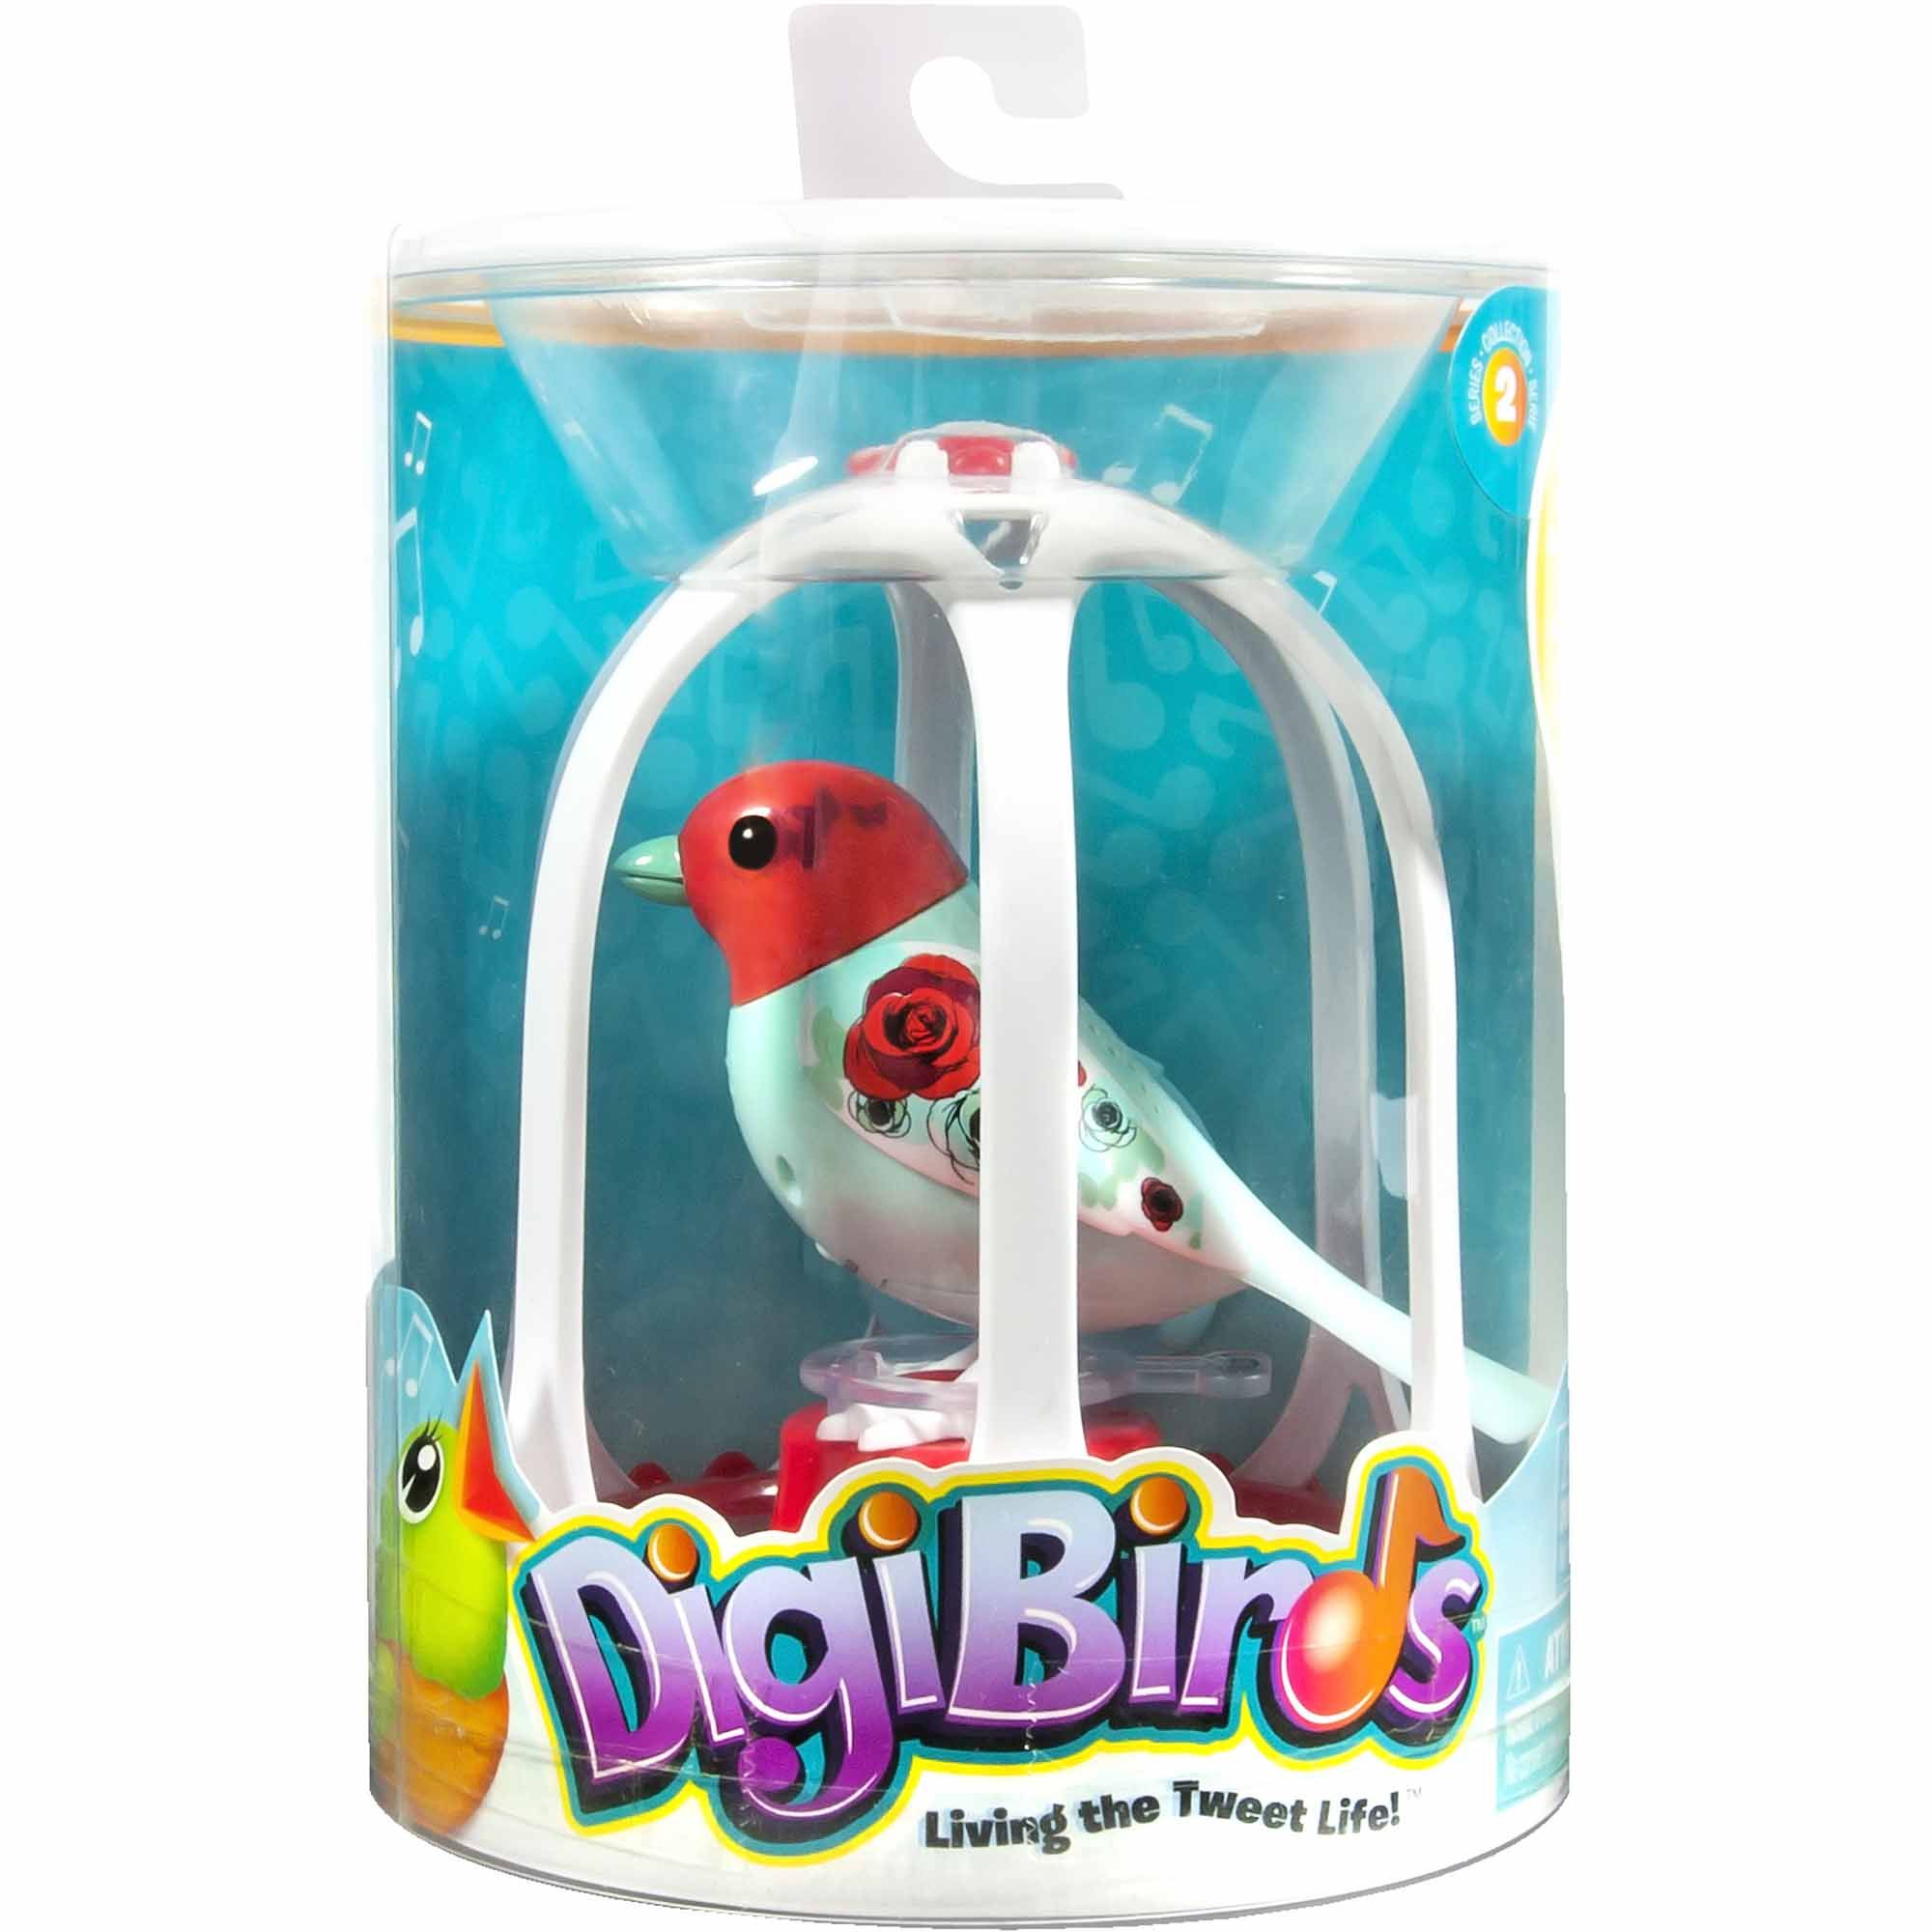 Digibirds ptica u kavezu više boja